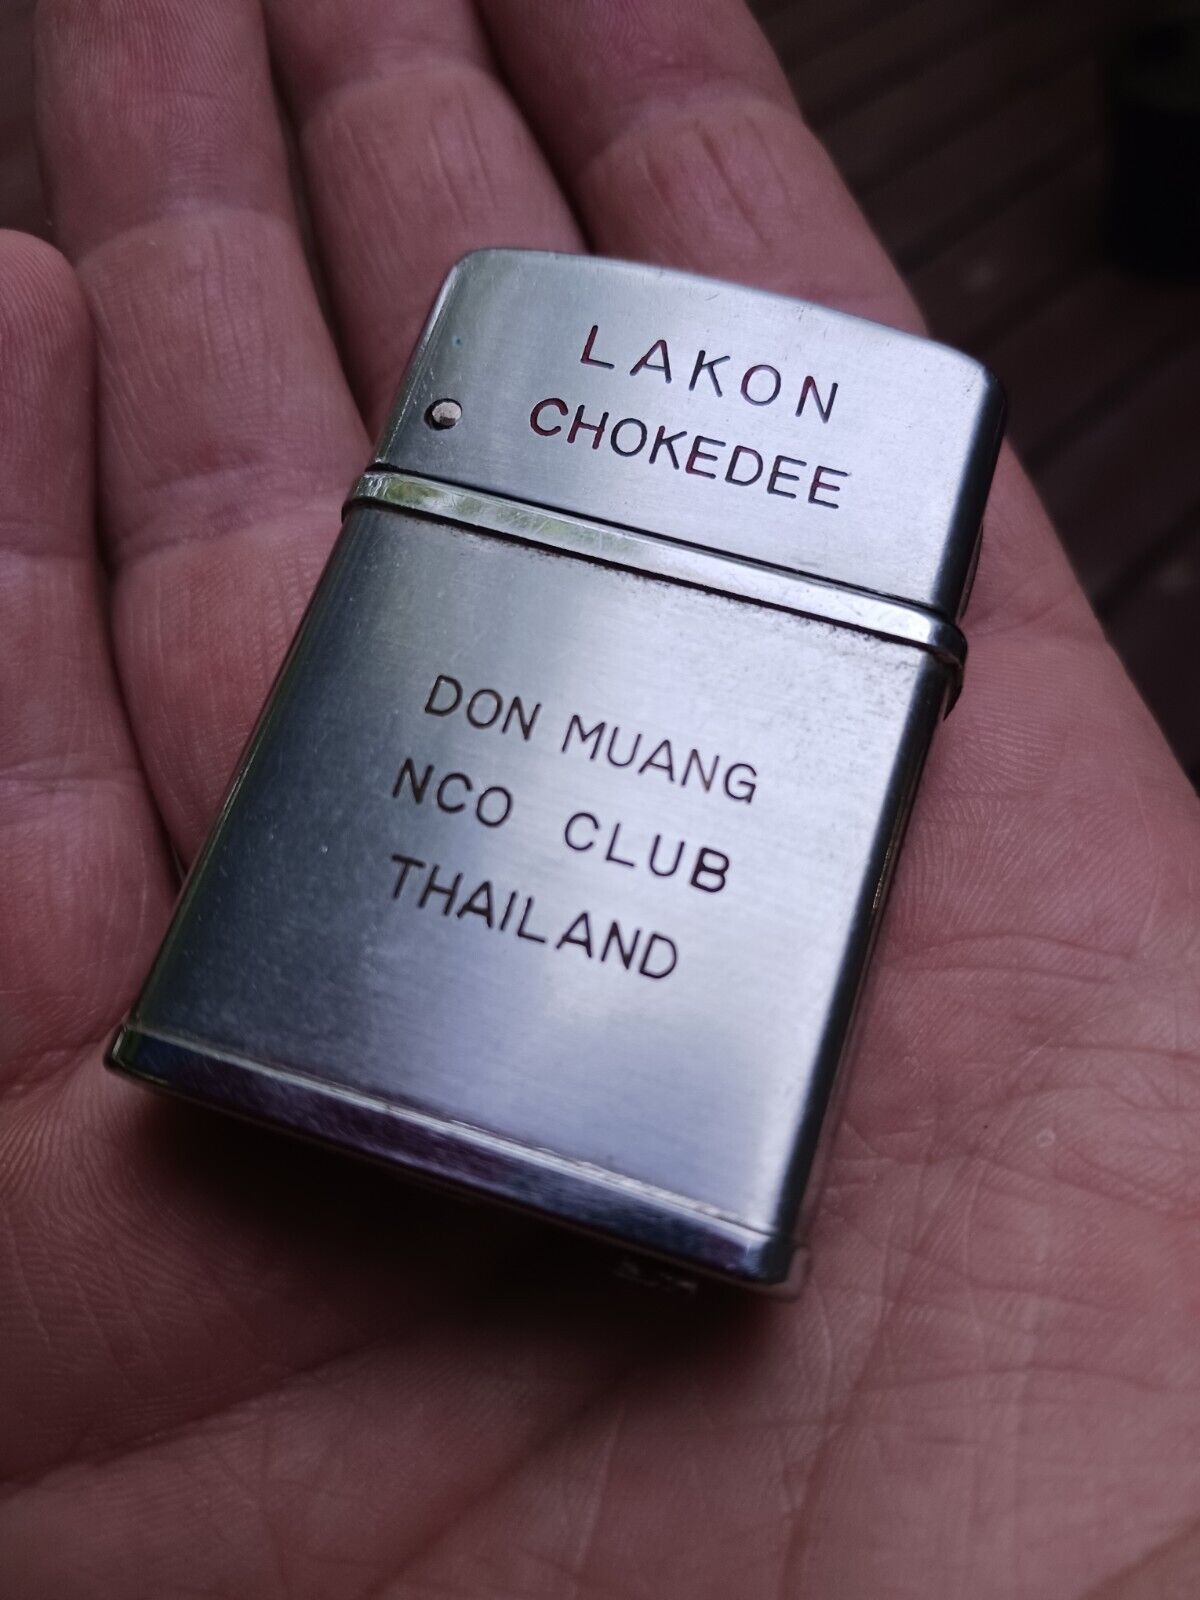 Vietnam War USAF Air Force Thailand Don Muang NCO Club Pipemate zippo lighter